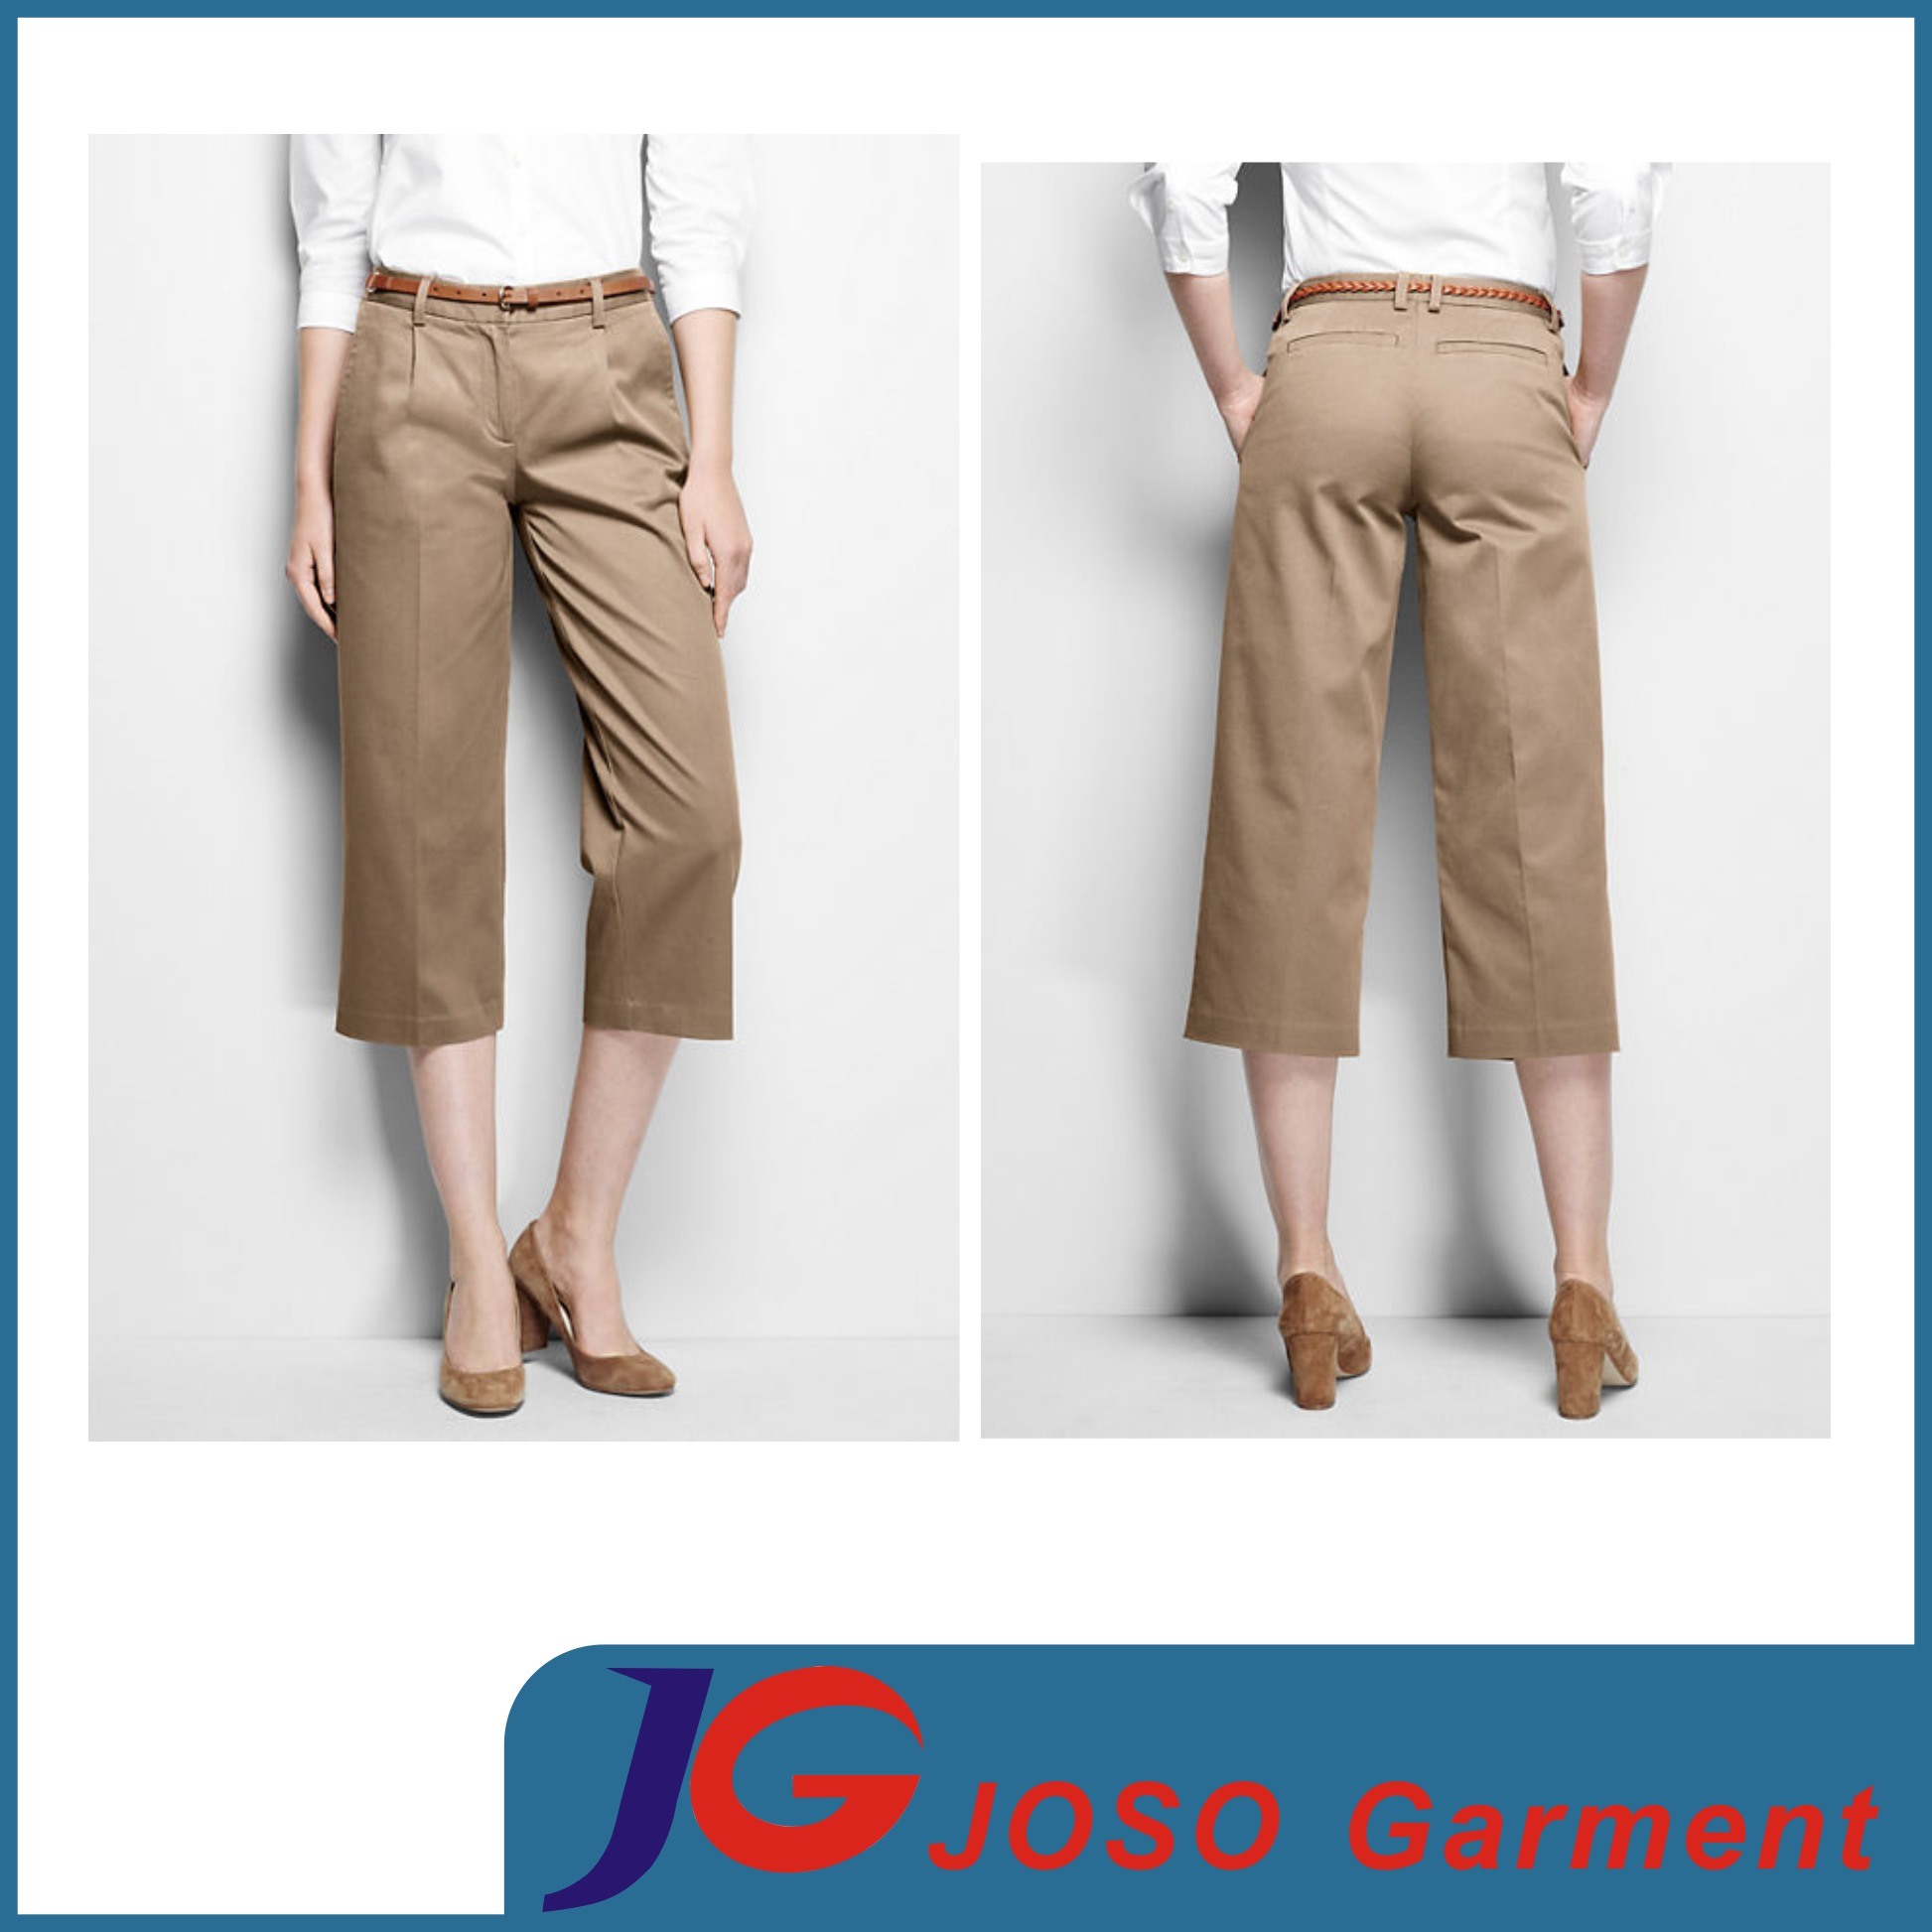 Lady Popular Fashion Short Pants Fit Chino Twill (JC1405)